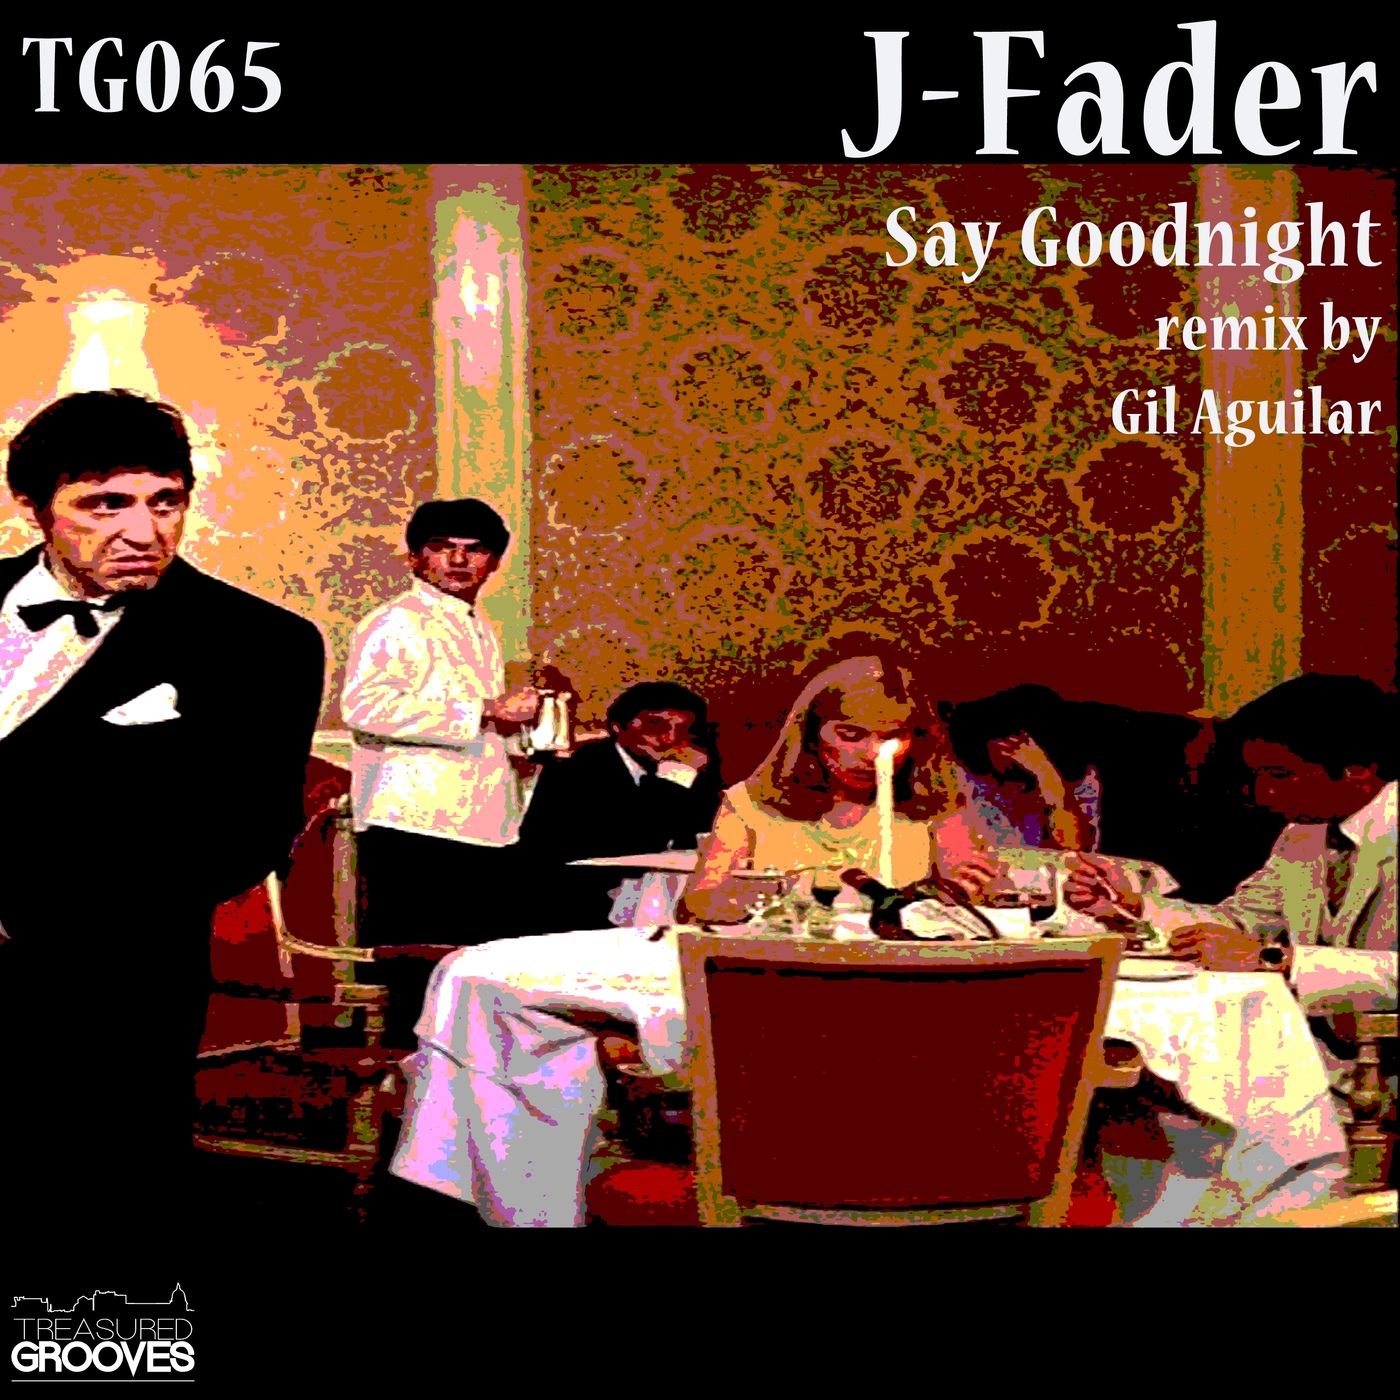 J-Fader - Say Goodnight / Treasured Grooves